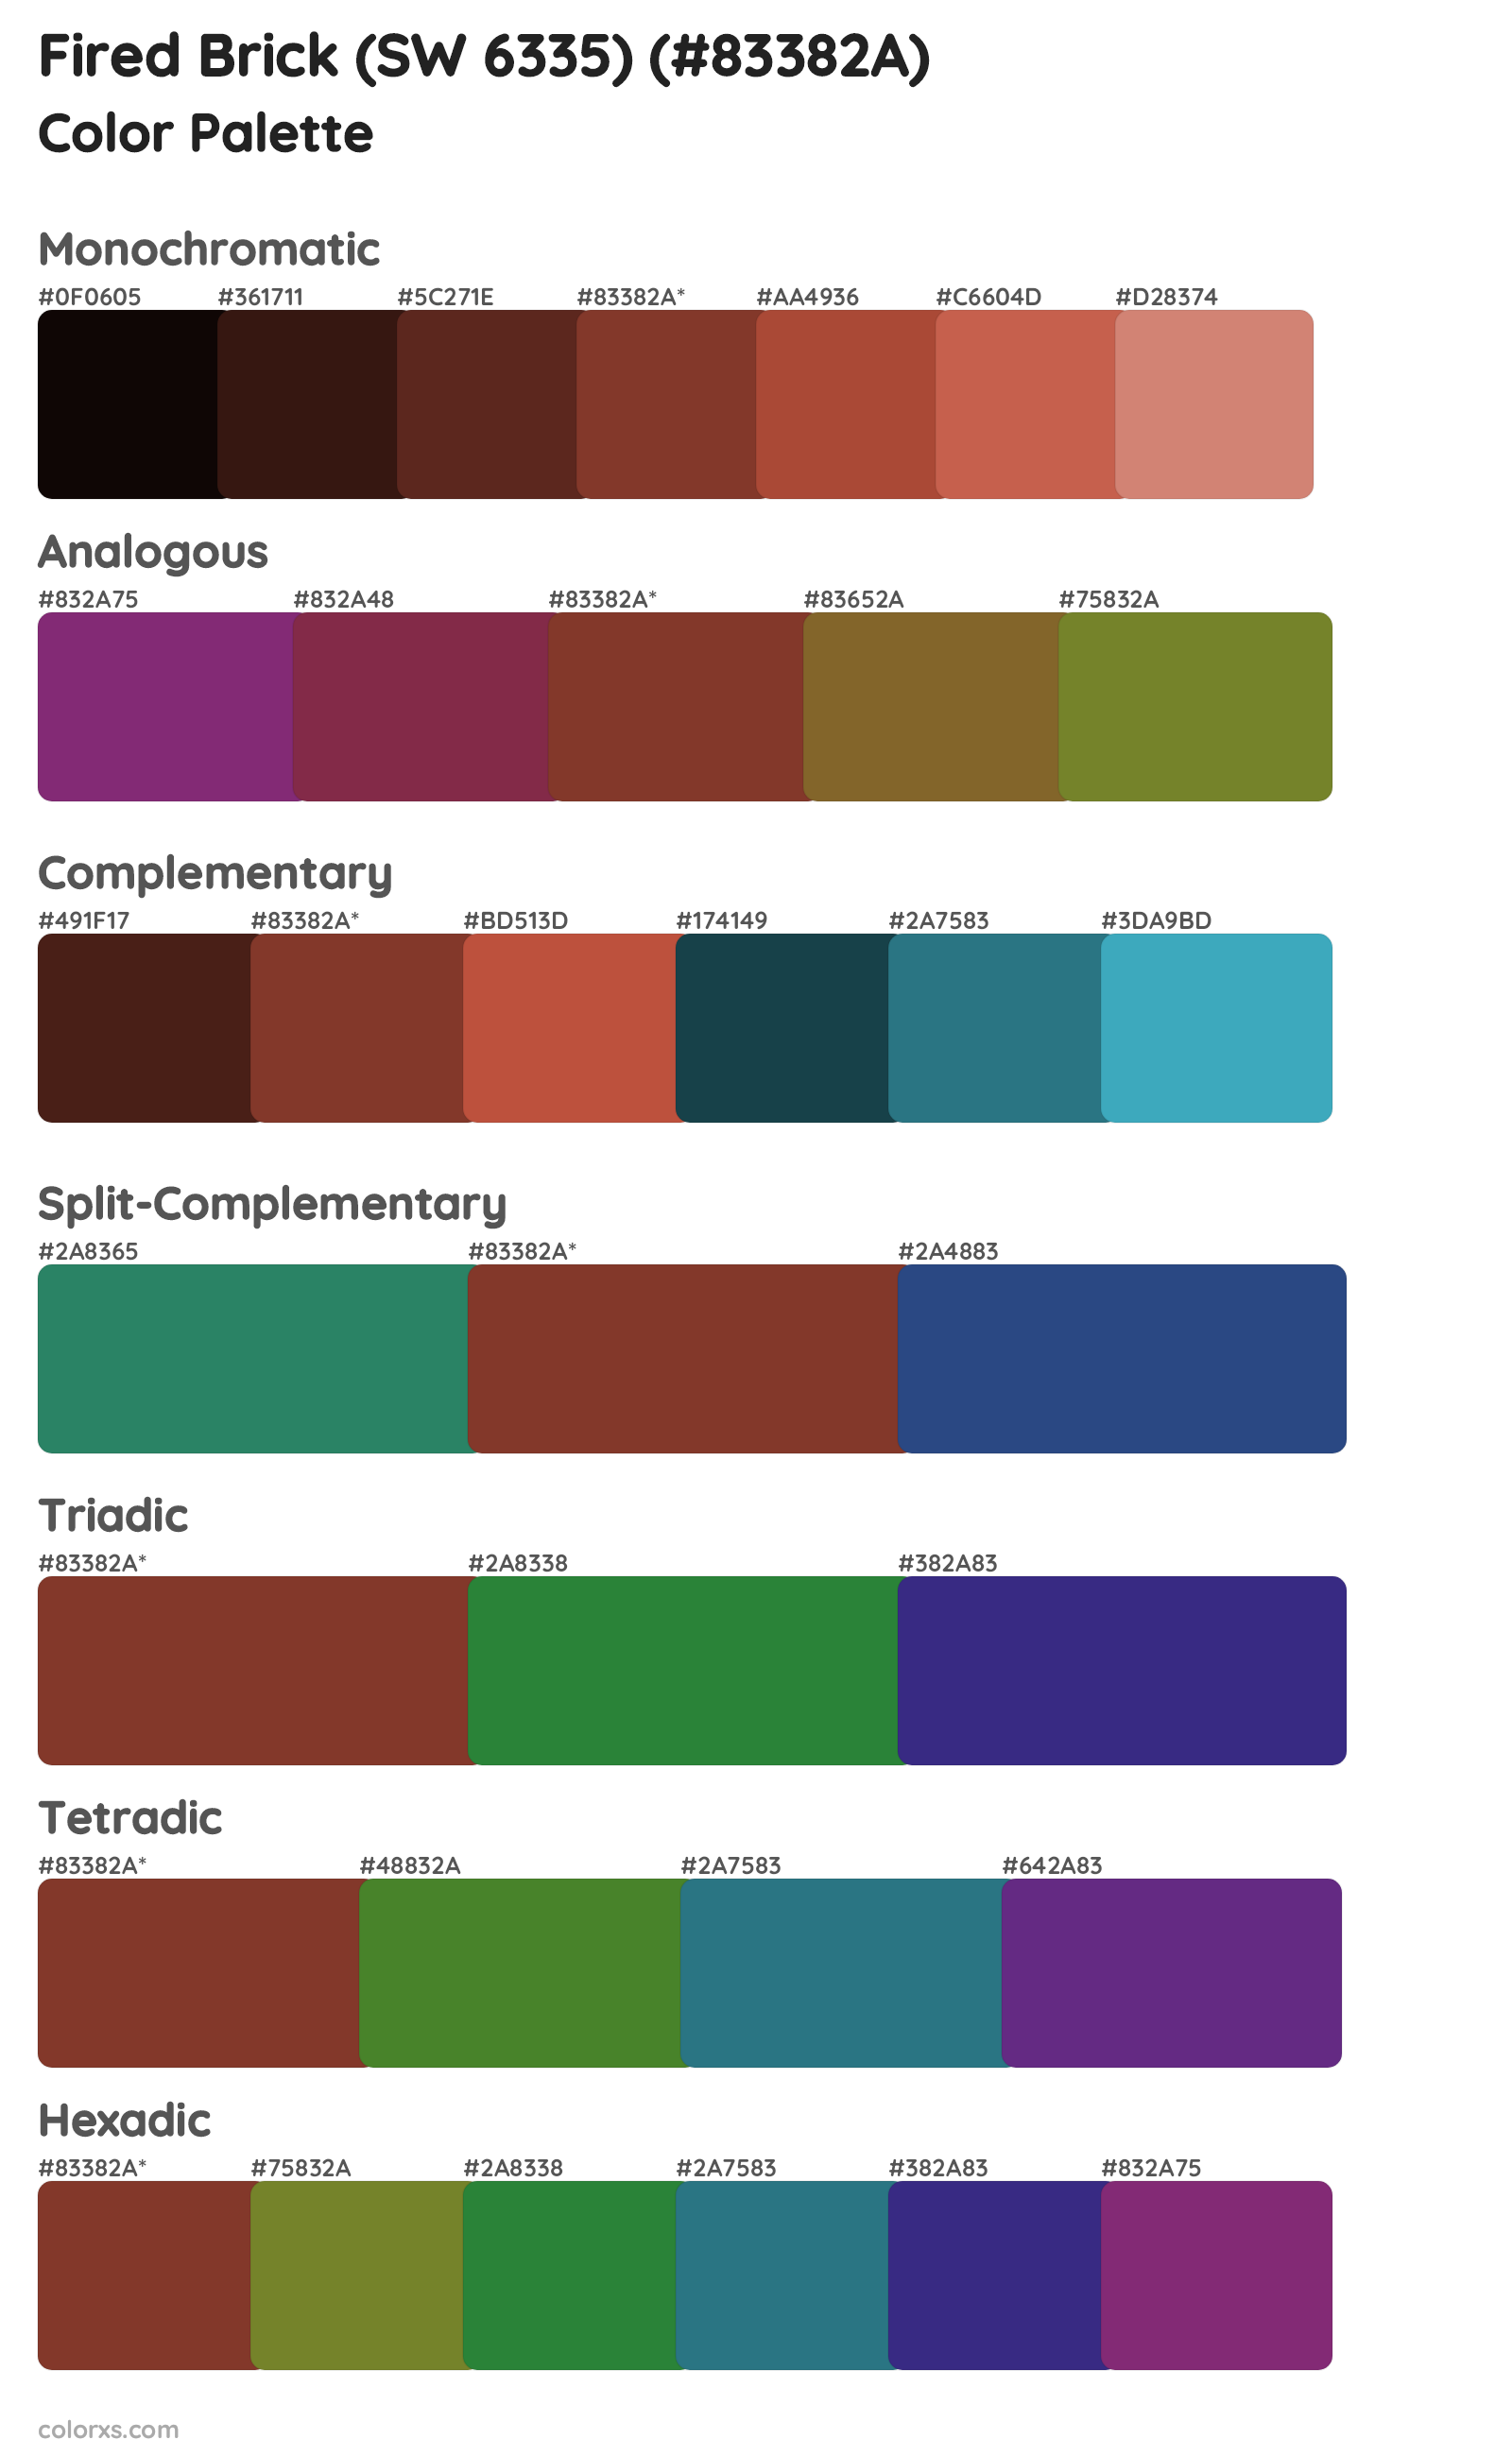 Fired Brick (SW 6335) Color Scheme Palettes